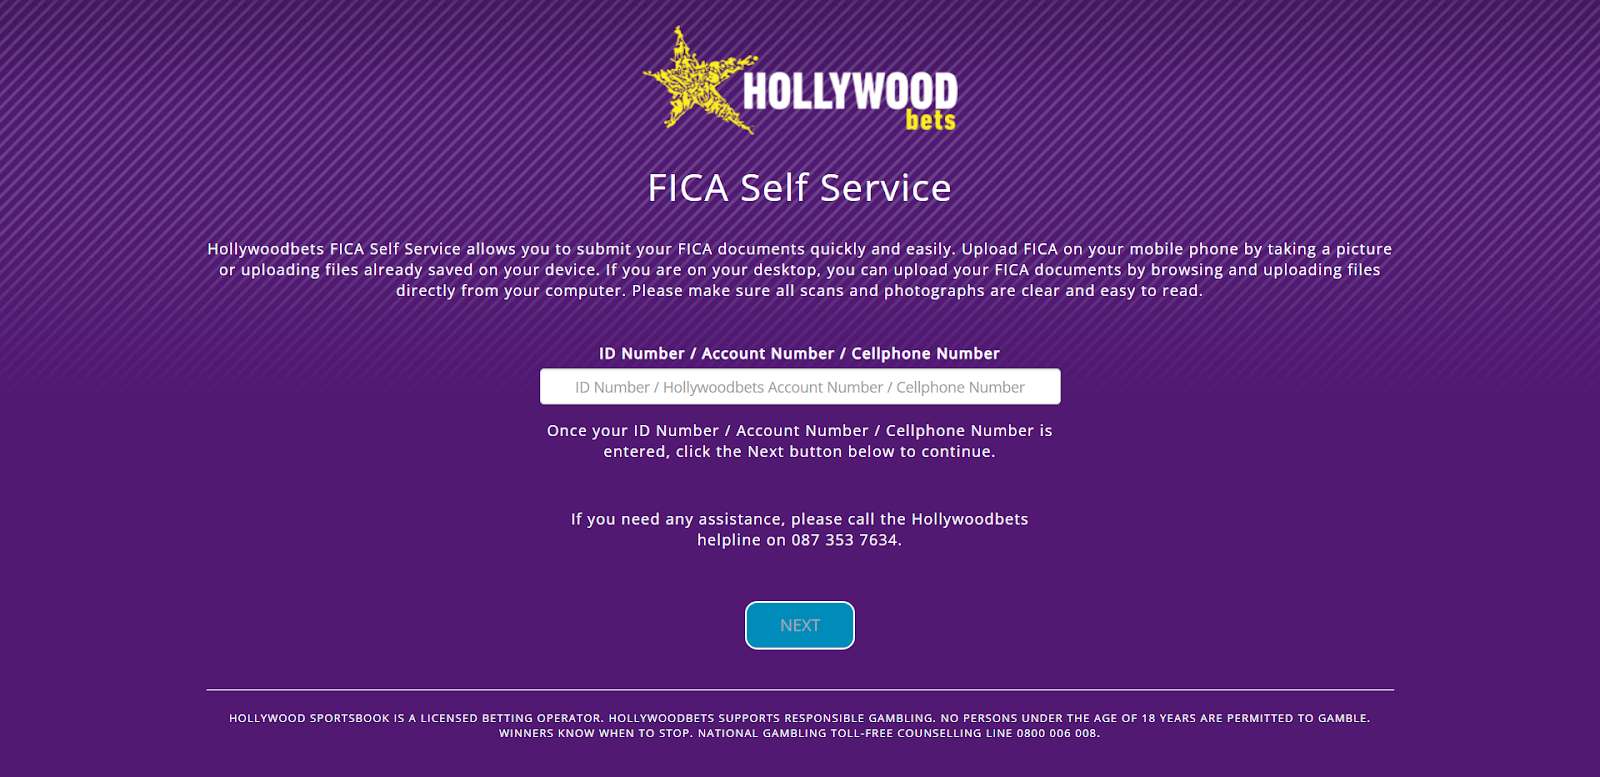 hollywoodbets fica self service screenshot